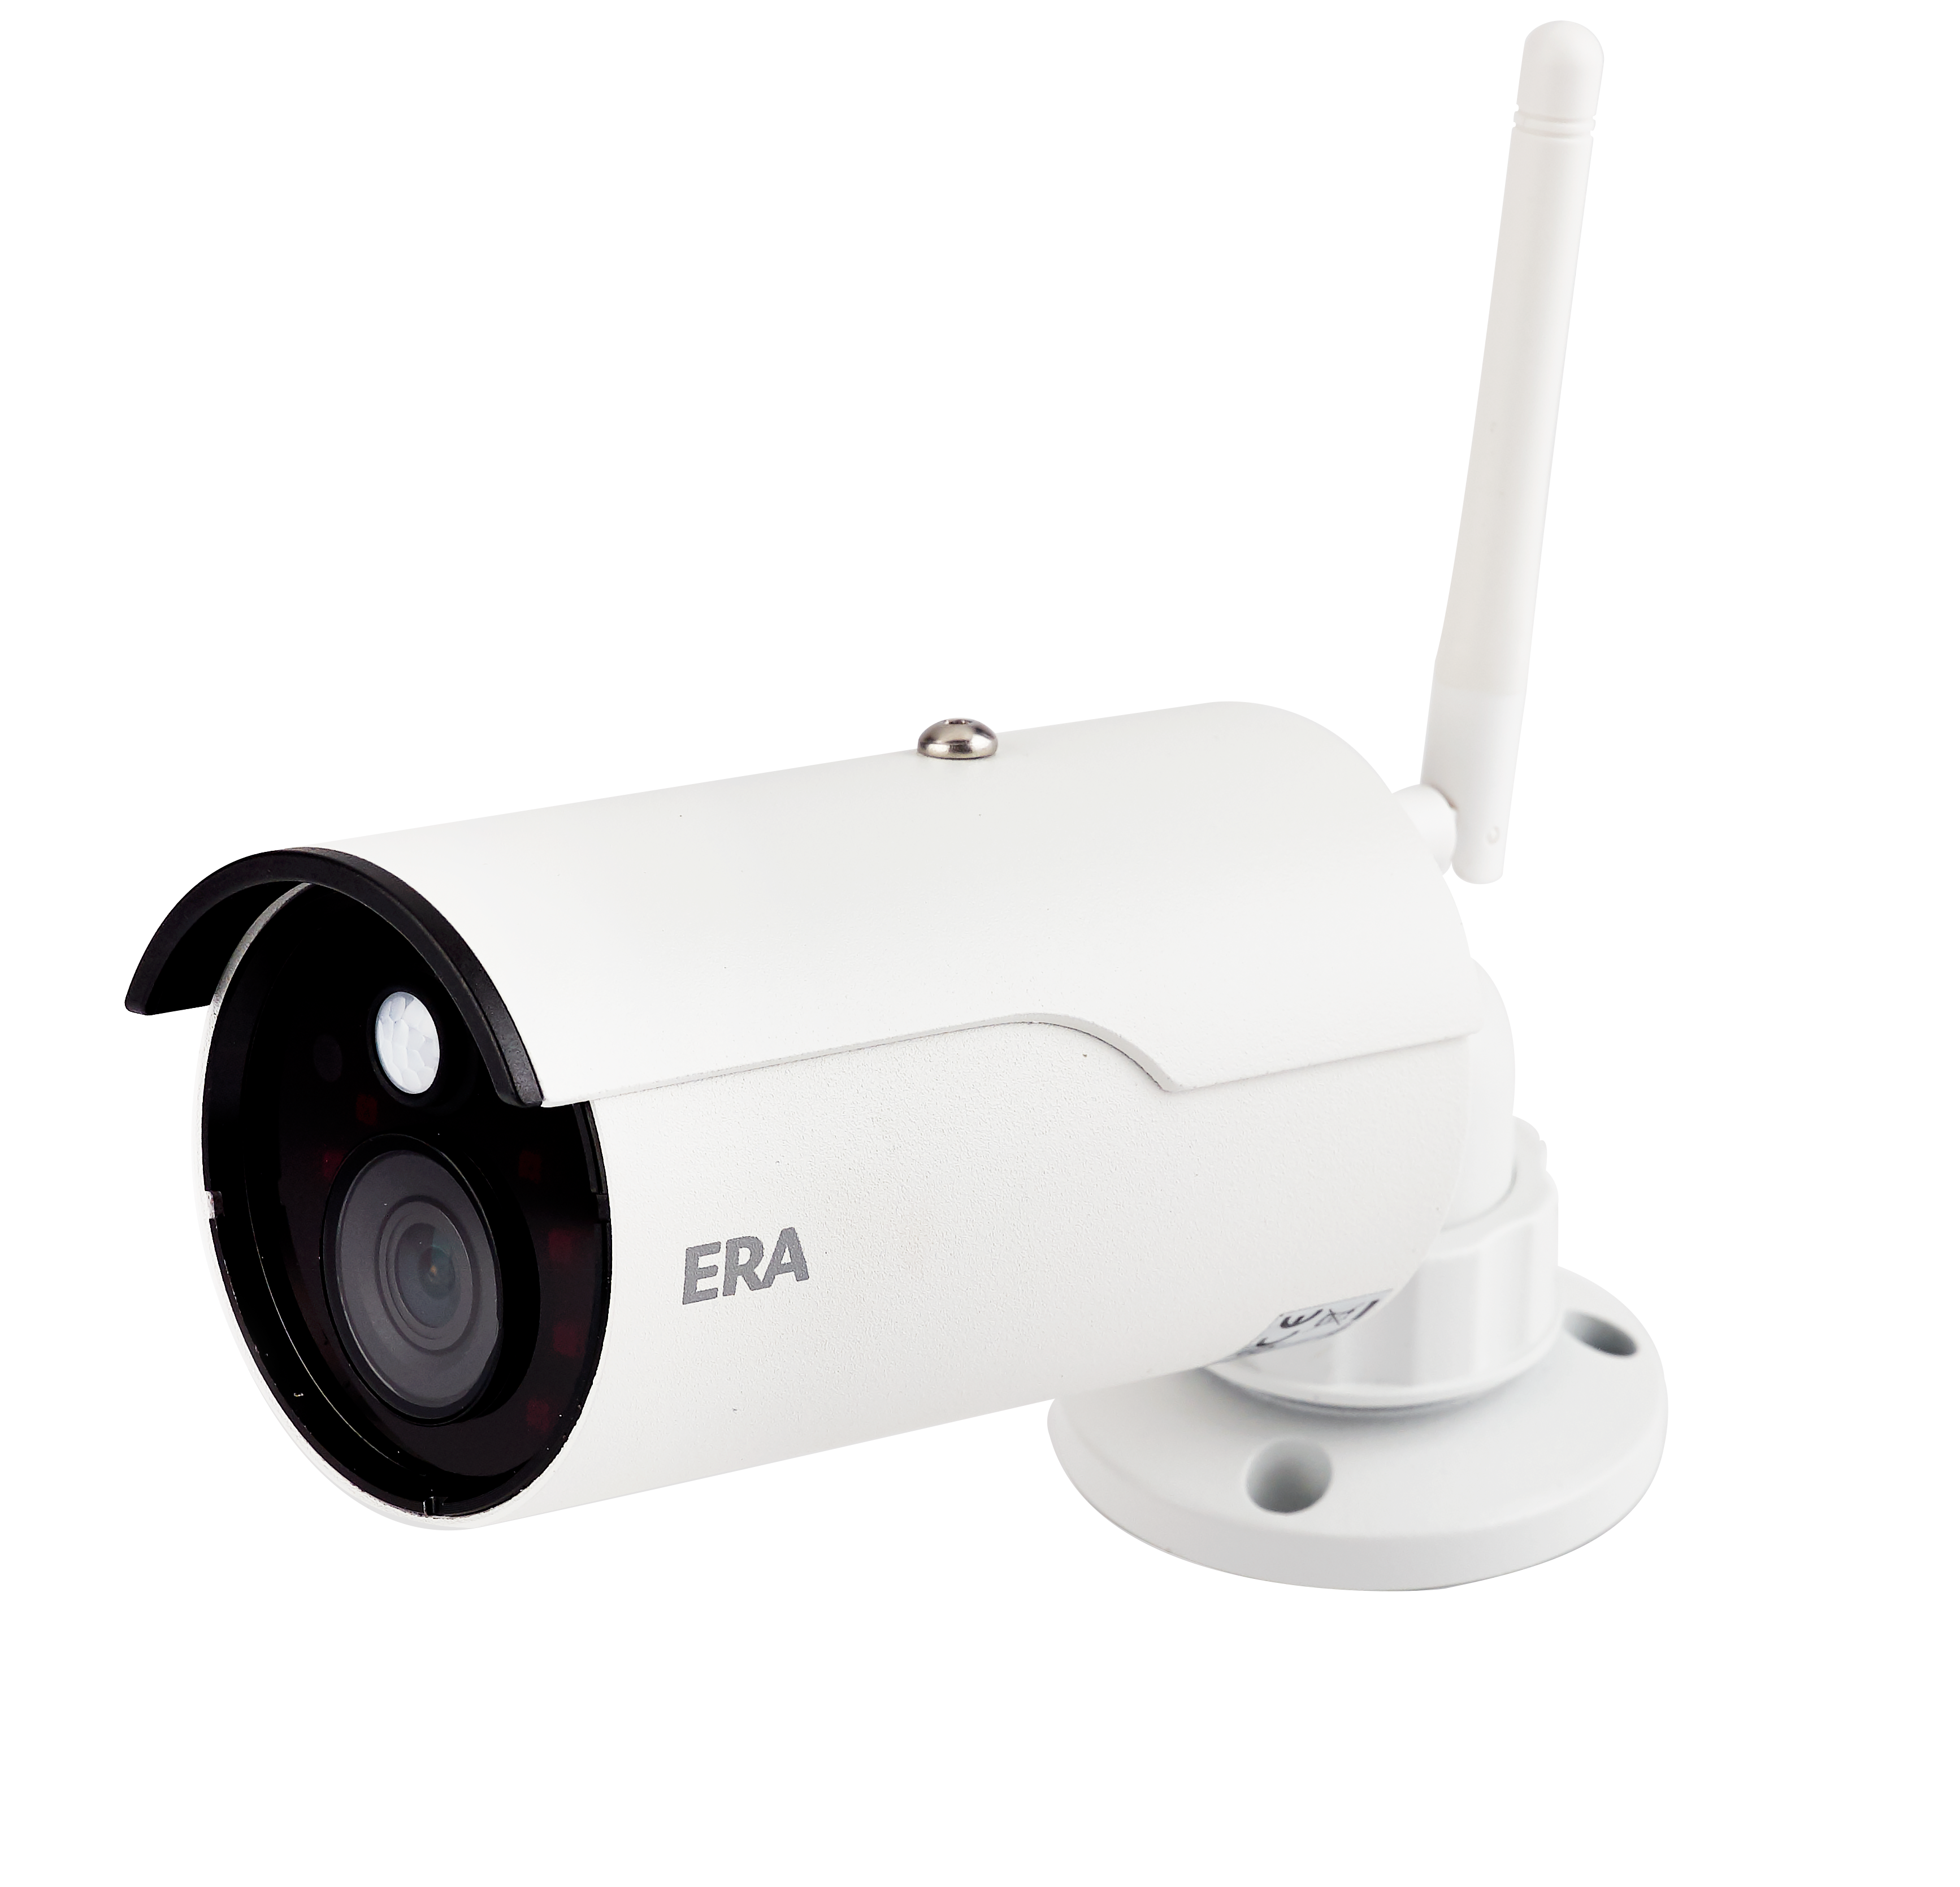 Wireless Outdoor Security Camera